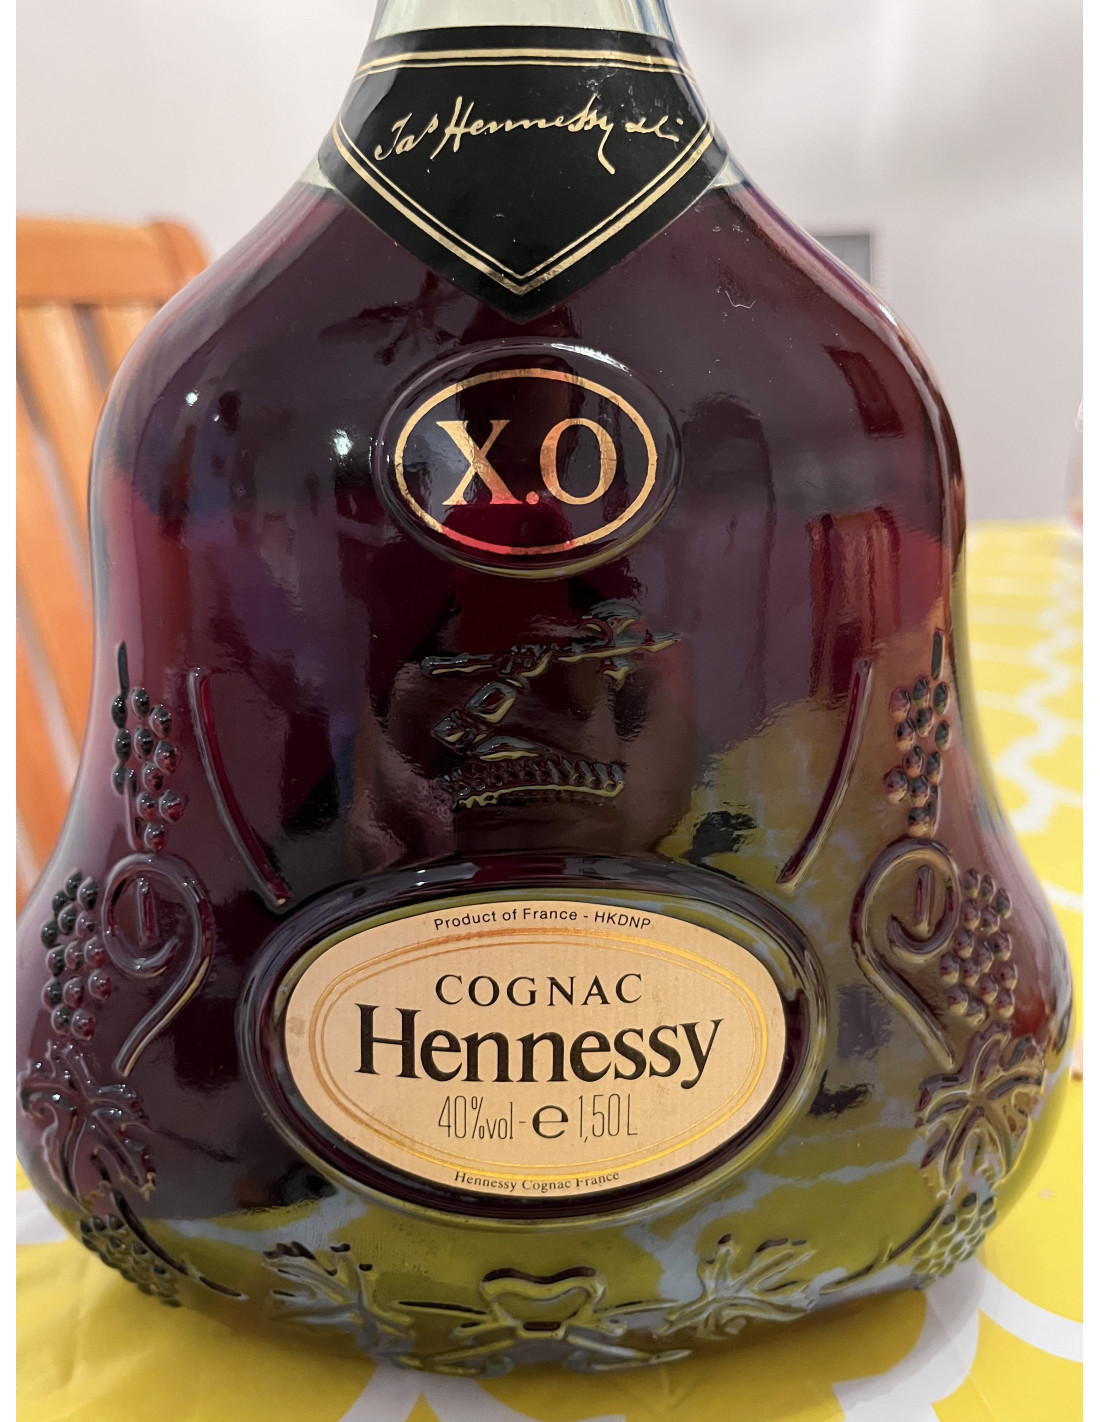 Where to buy Hennessy X.O. Cognac